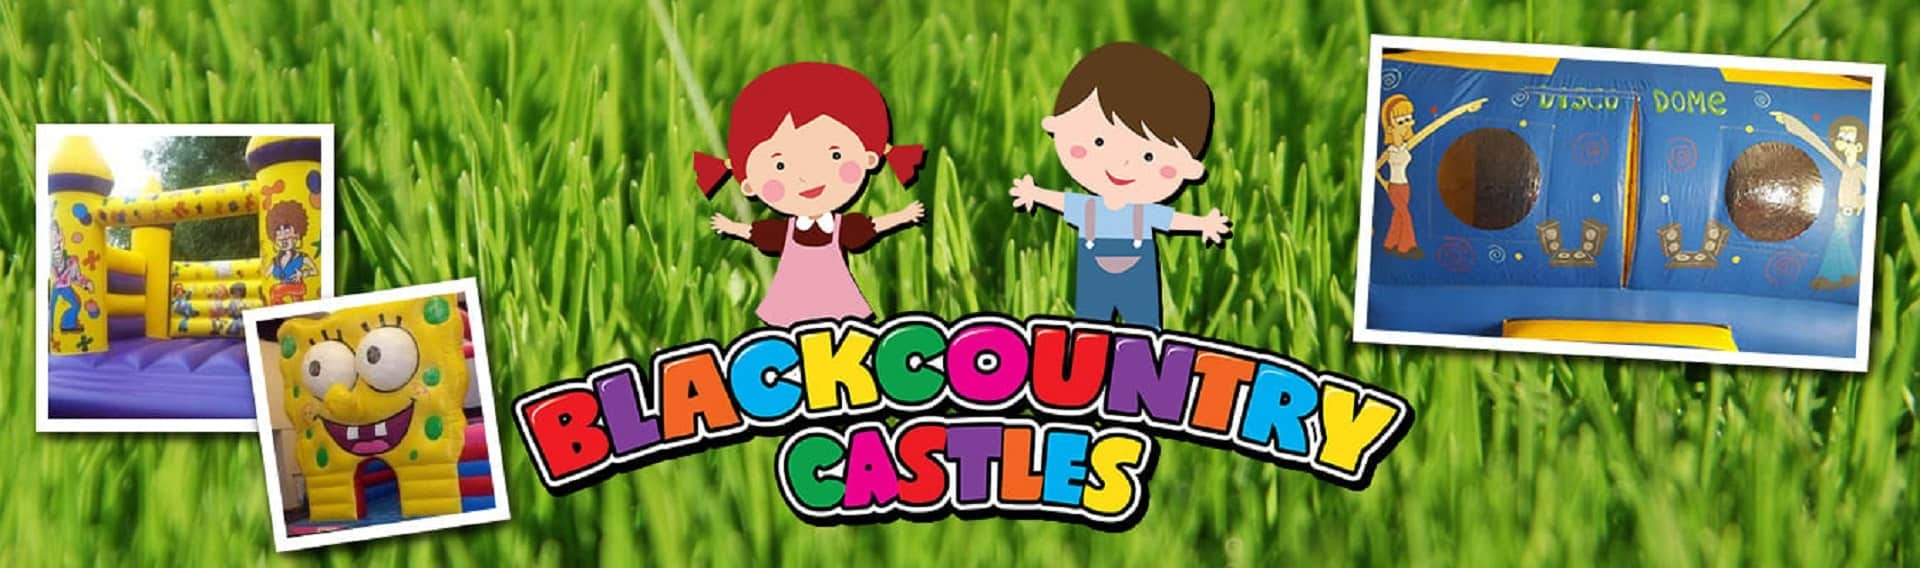 Blackcountry Castles in UK